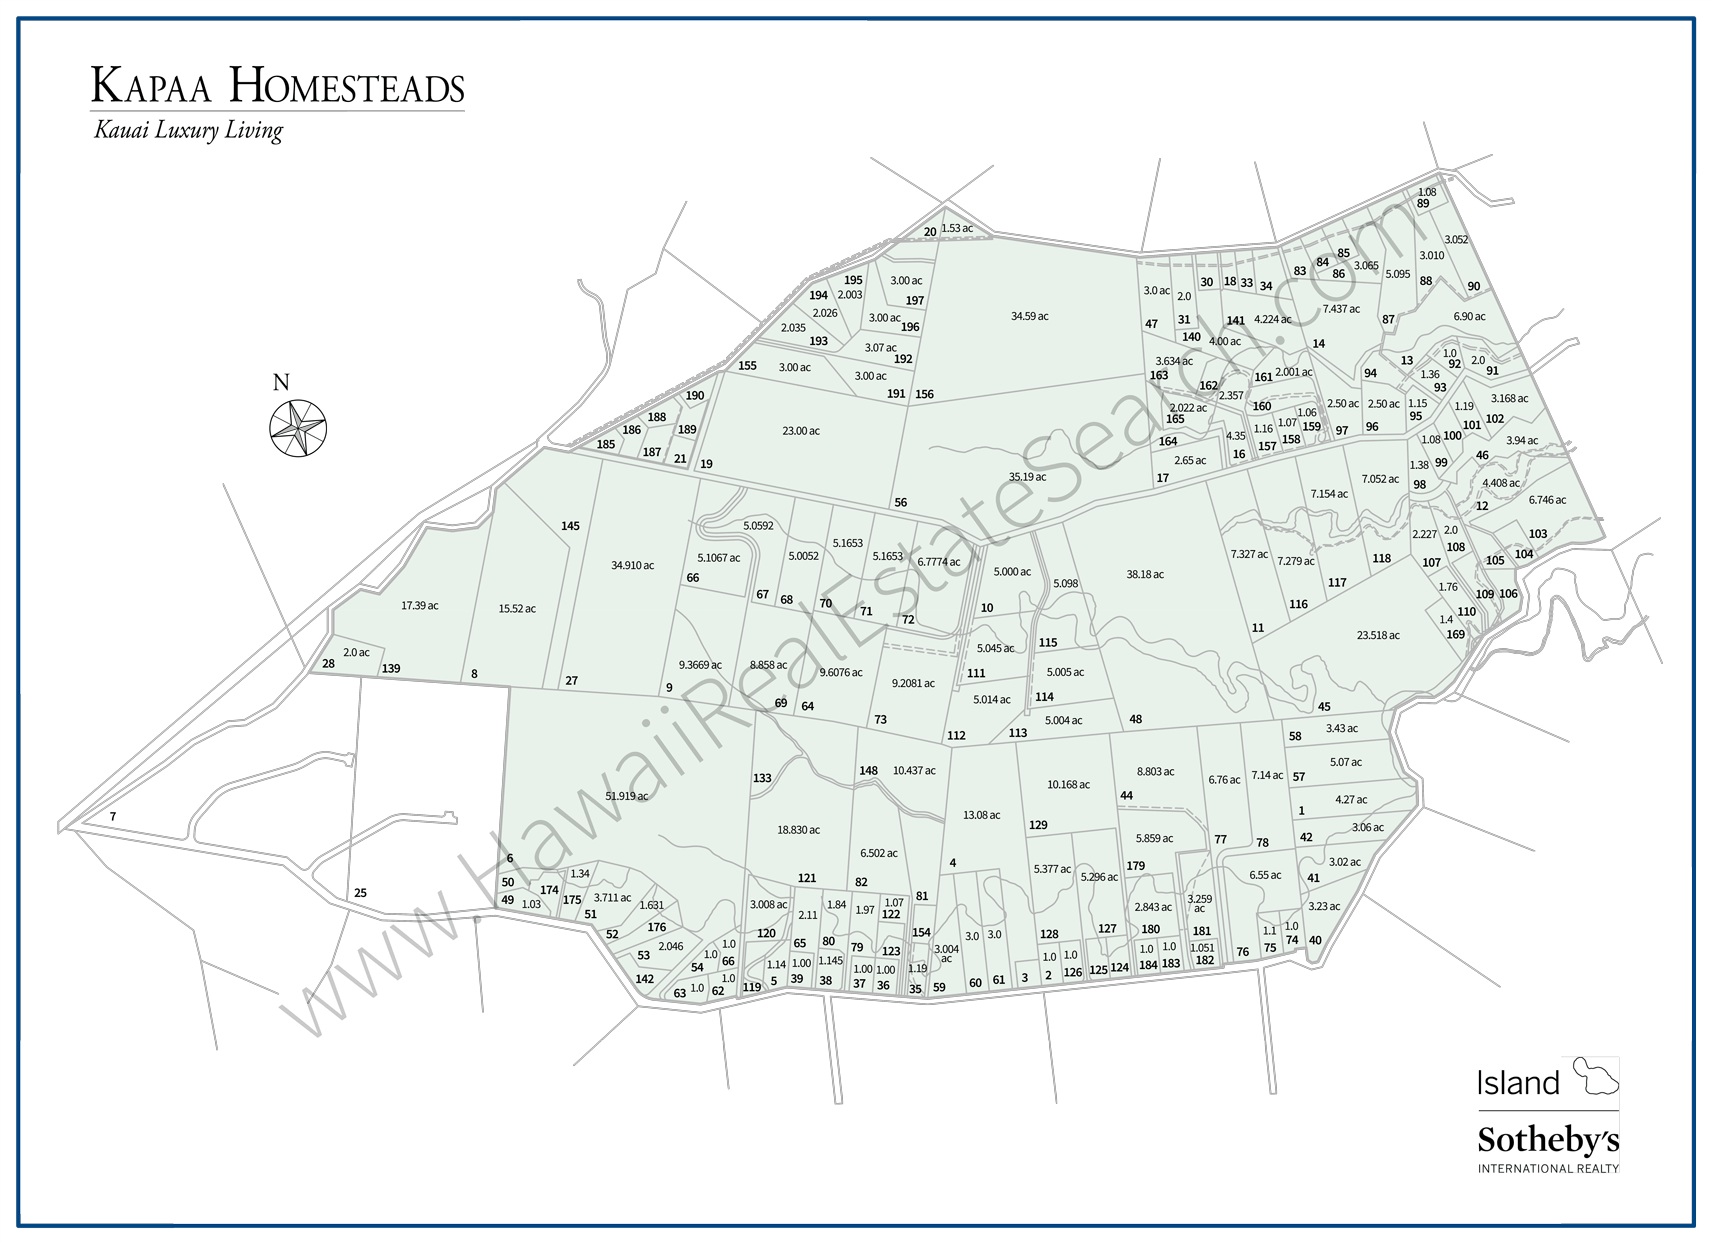 Kapaa Homestead Map